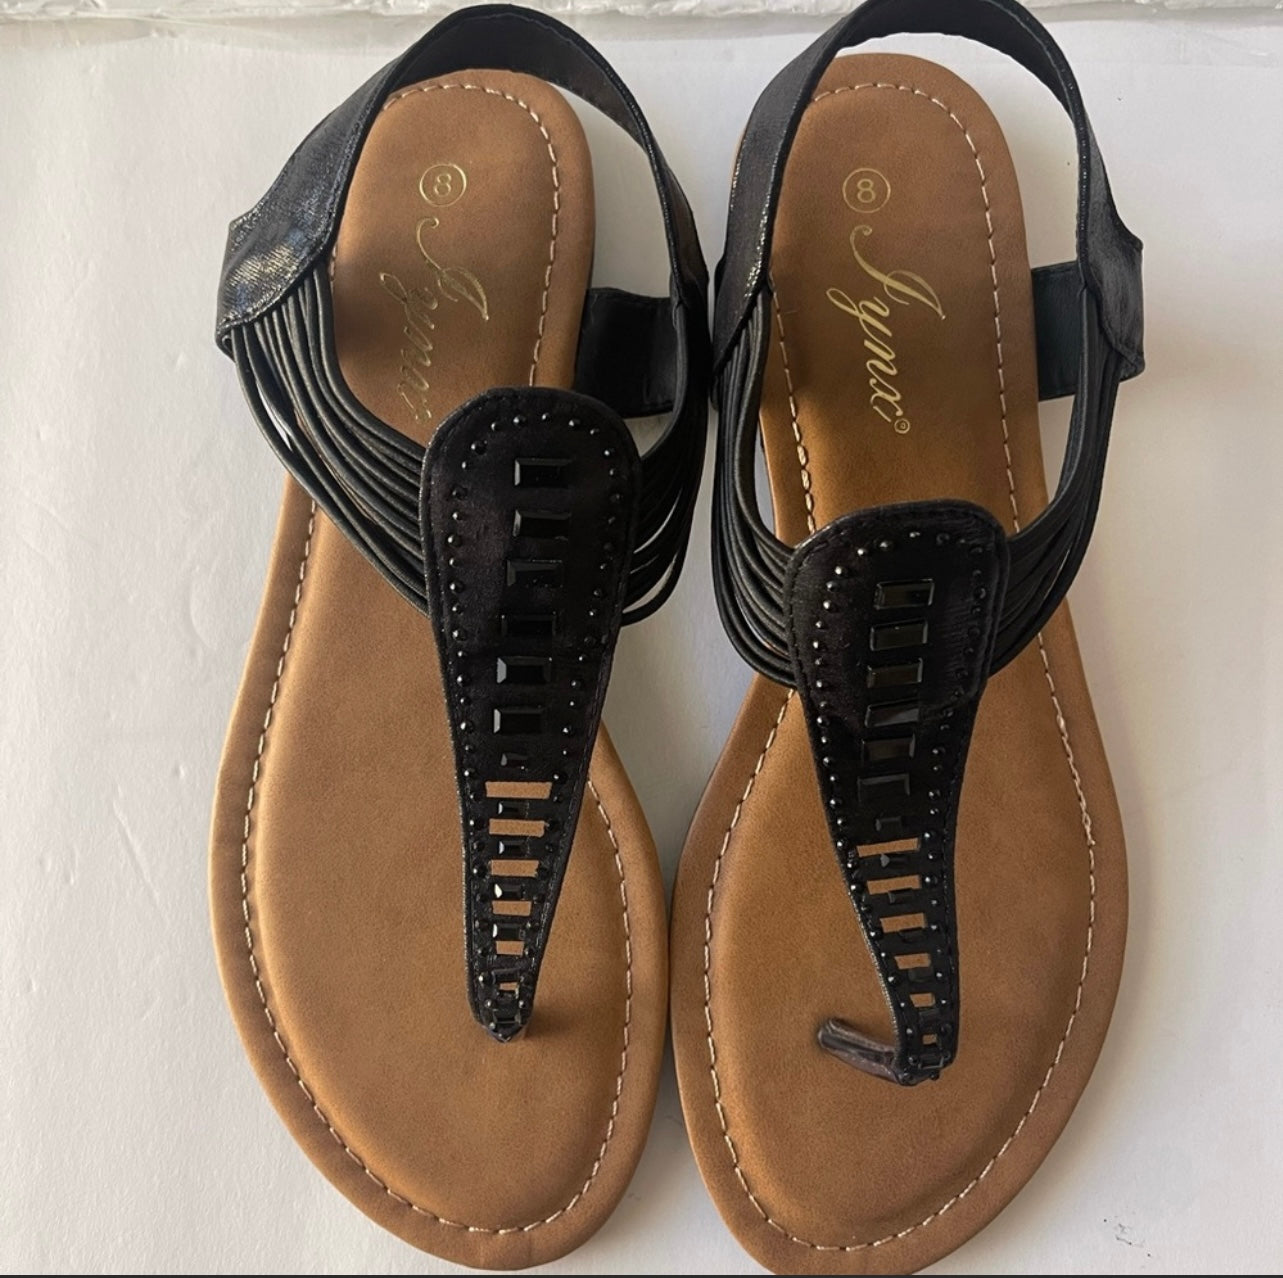 Flat Sandals Black w/bling front